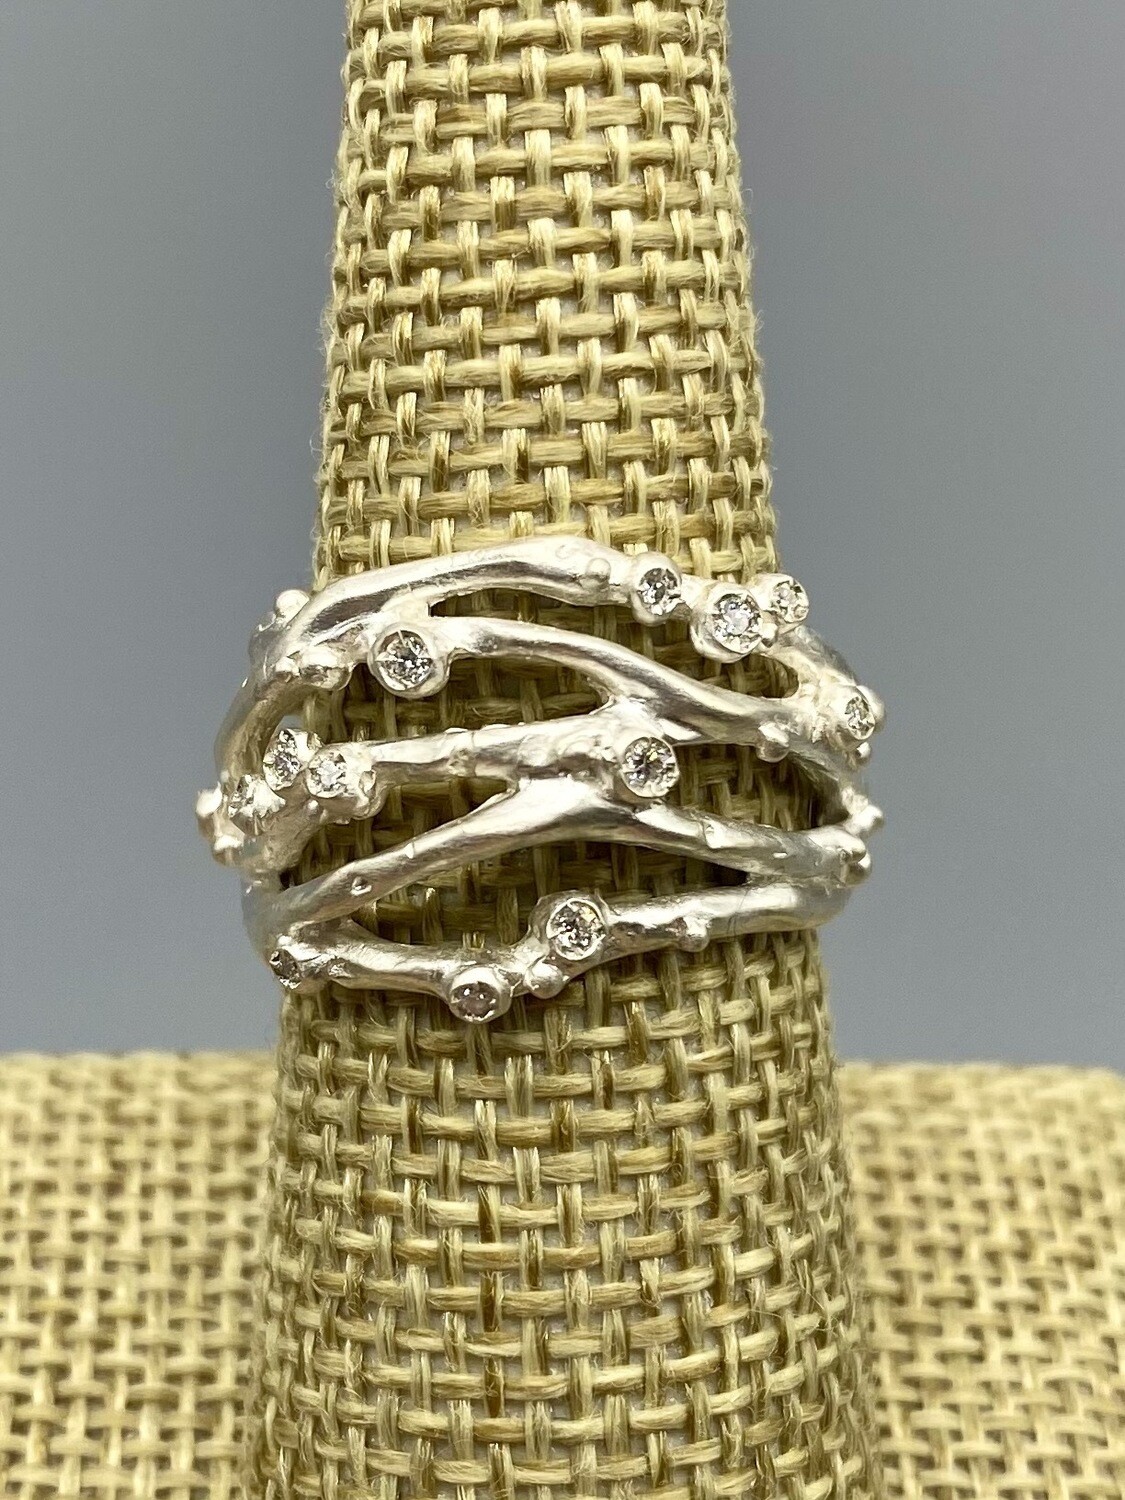 Sz 7 Encrusted 5 Branch Ring w/Diamonds, Sterling Silver - Branch Jewelry - Venice CA